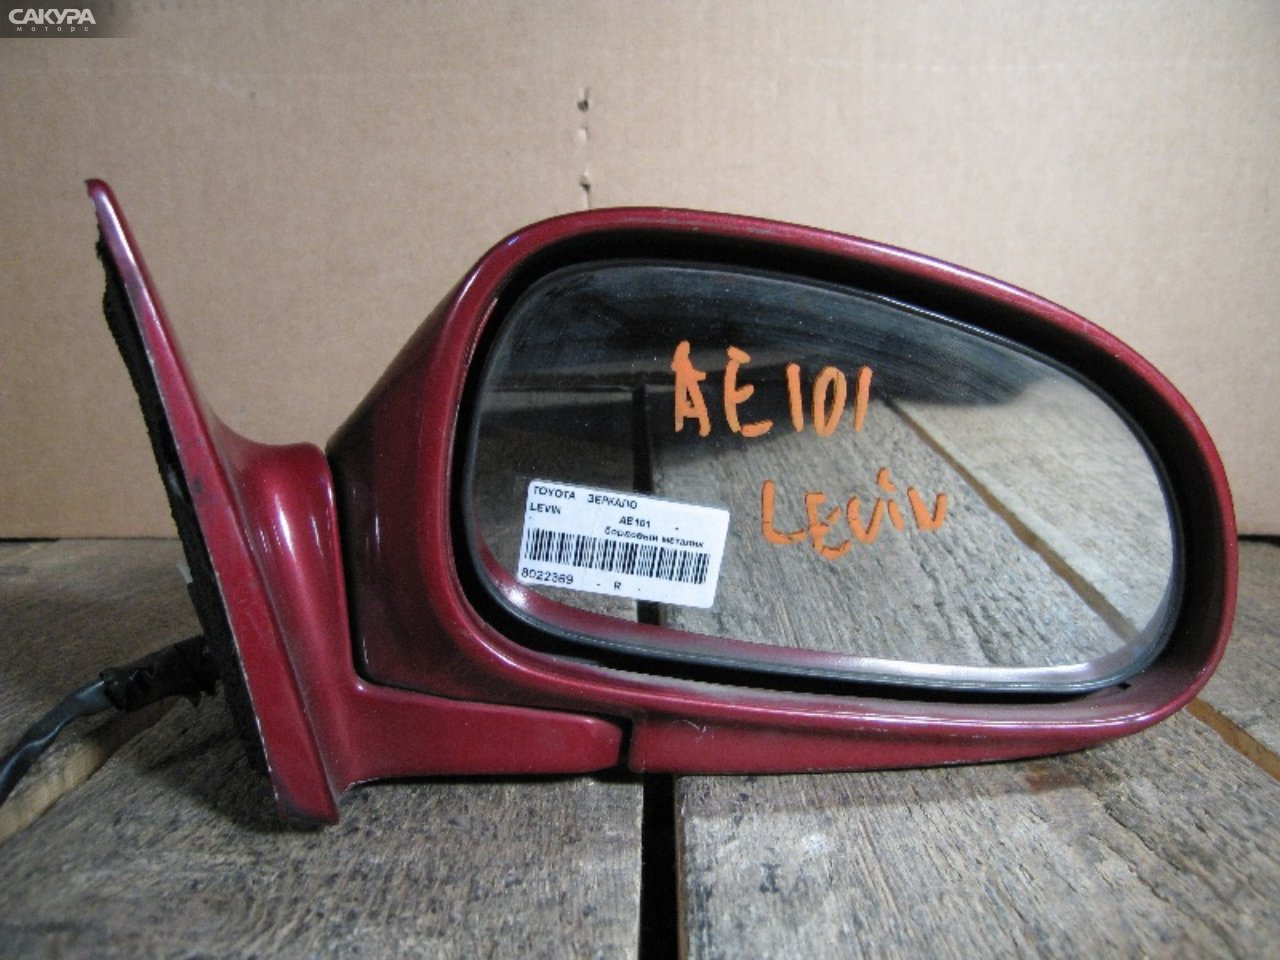 Зеркало боковое правое Toyota Corolla Levin AE101: купить в Сакура Абакан.